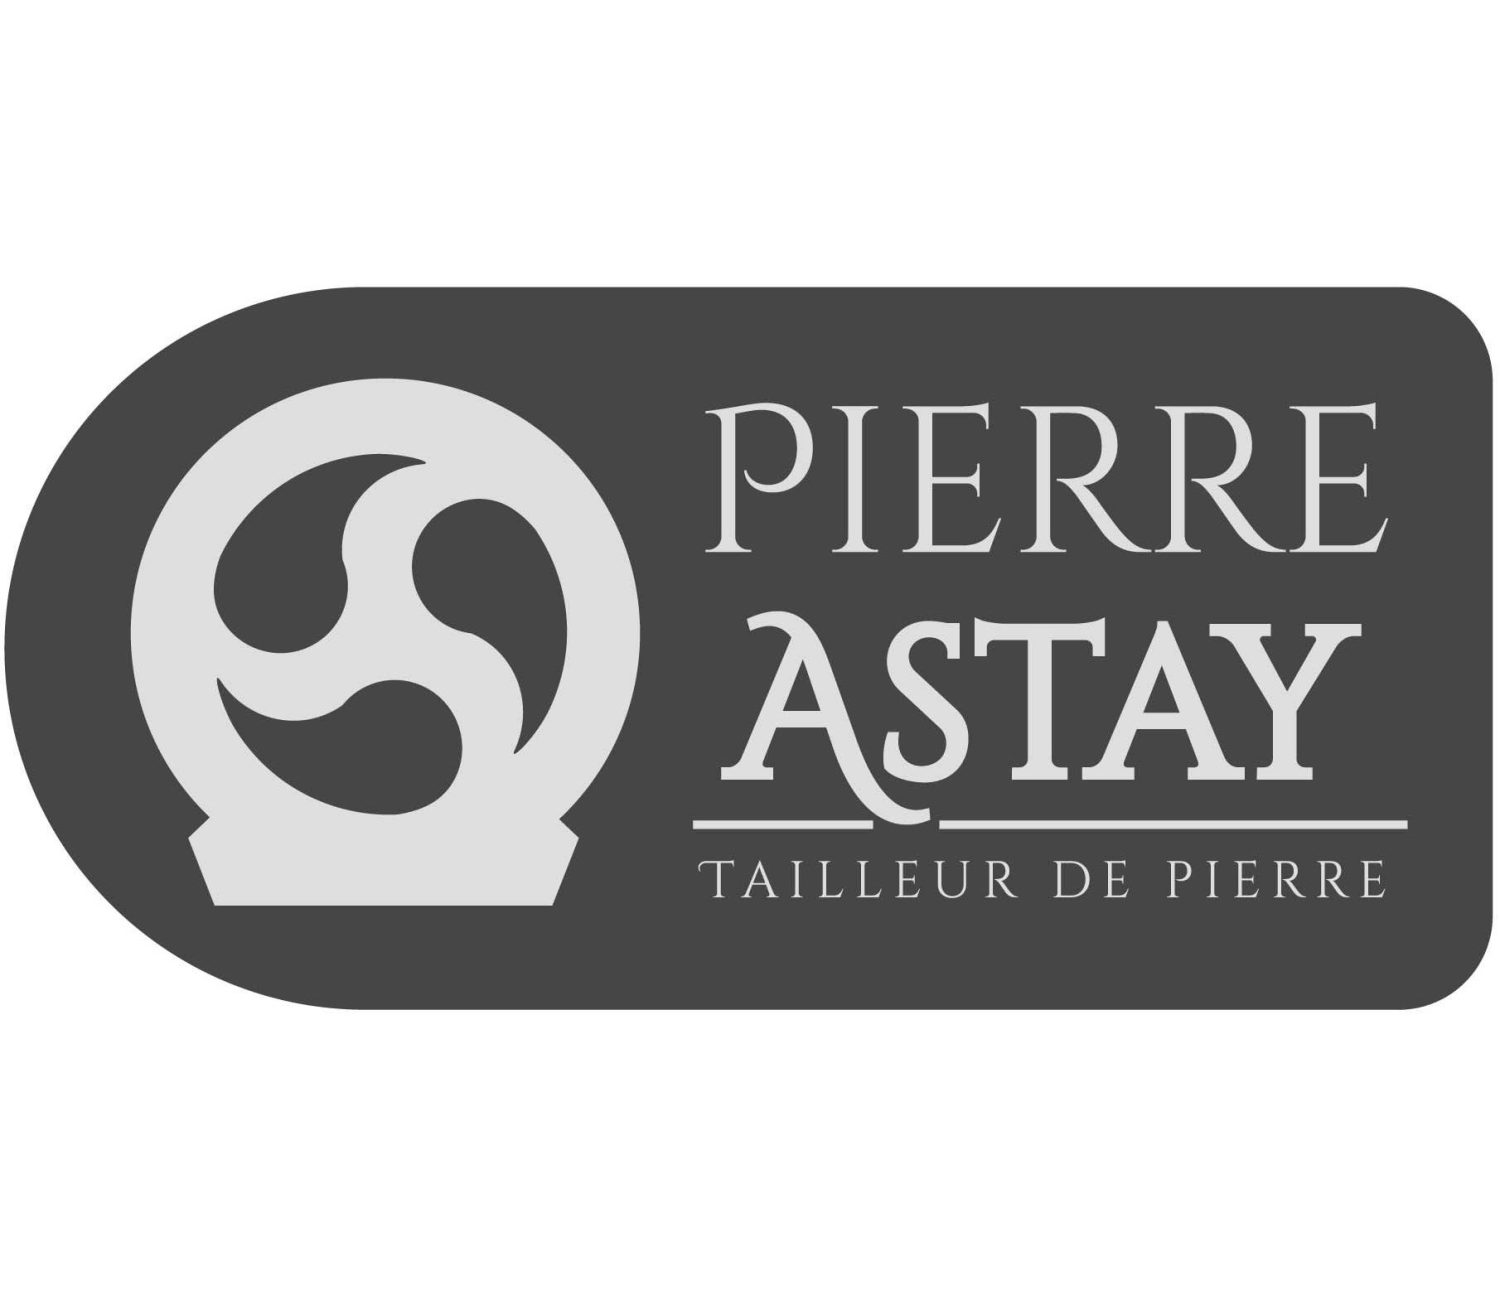 Logo Pierre Astay CarrC Fond 10x Qc0jj7v87aqw9wocy0l7q8xki9te6hshain9tvmgug